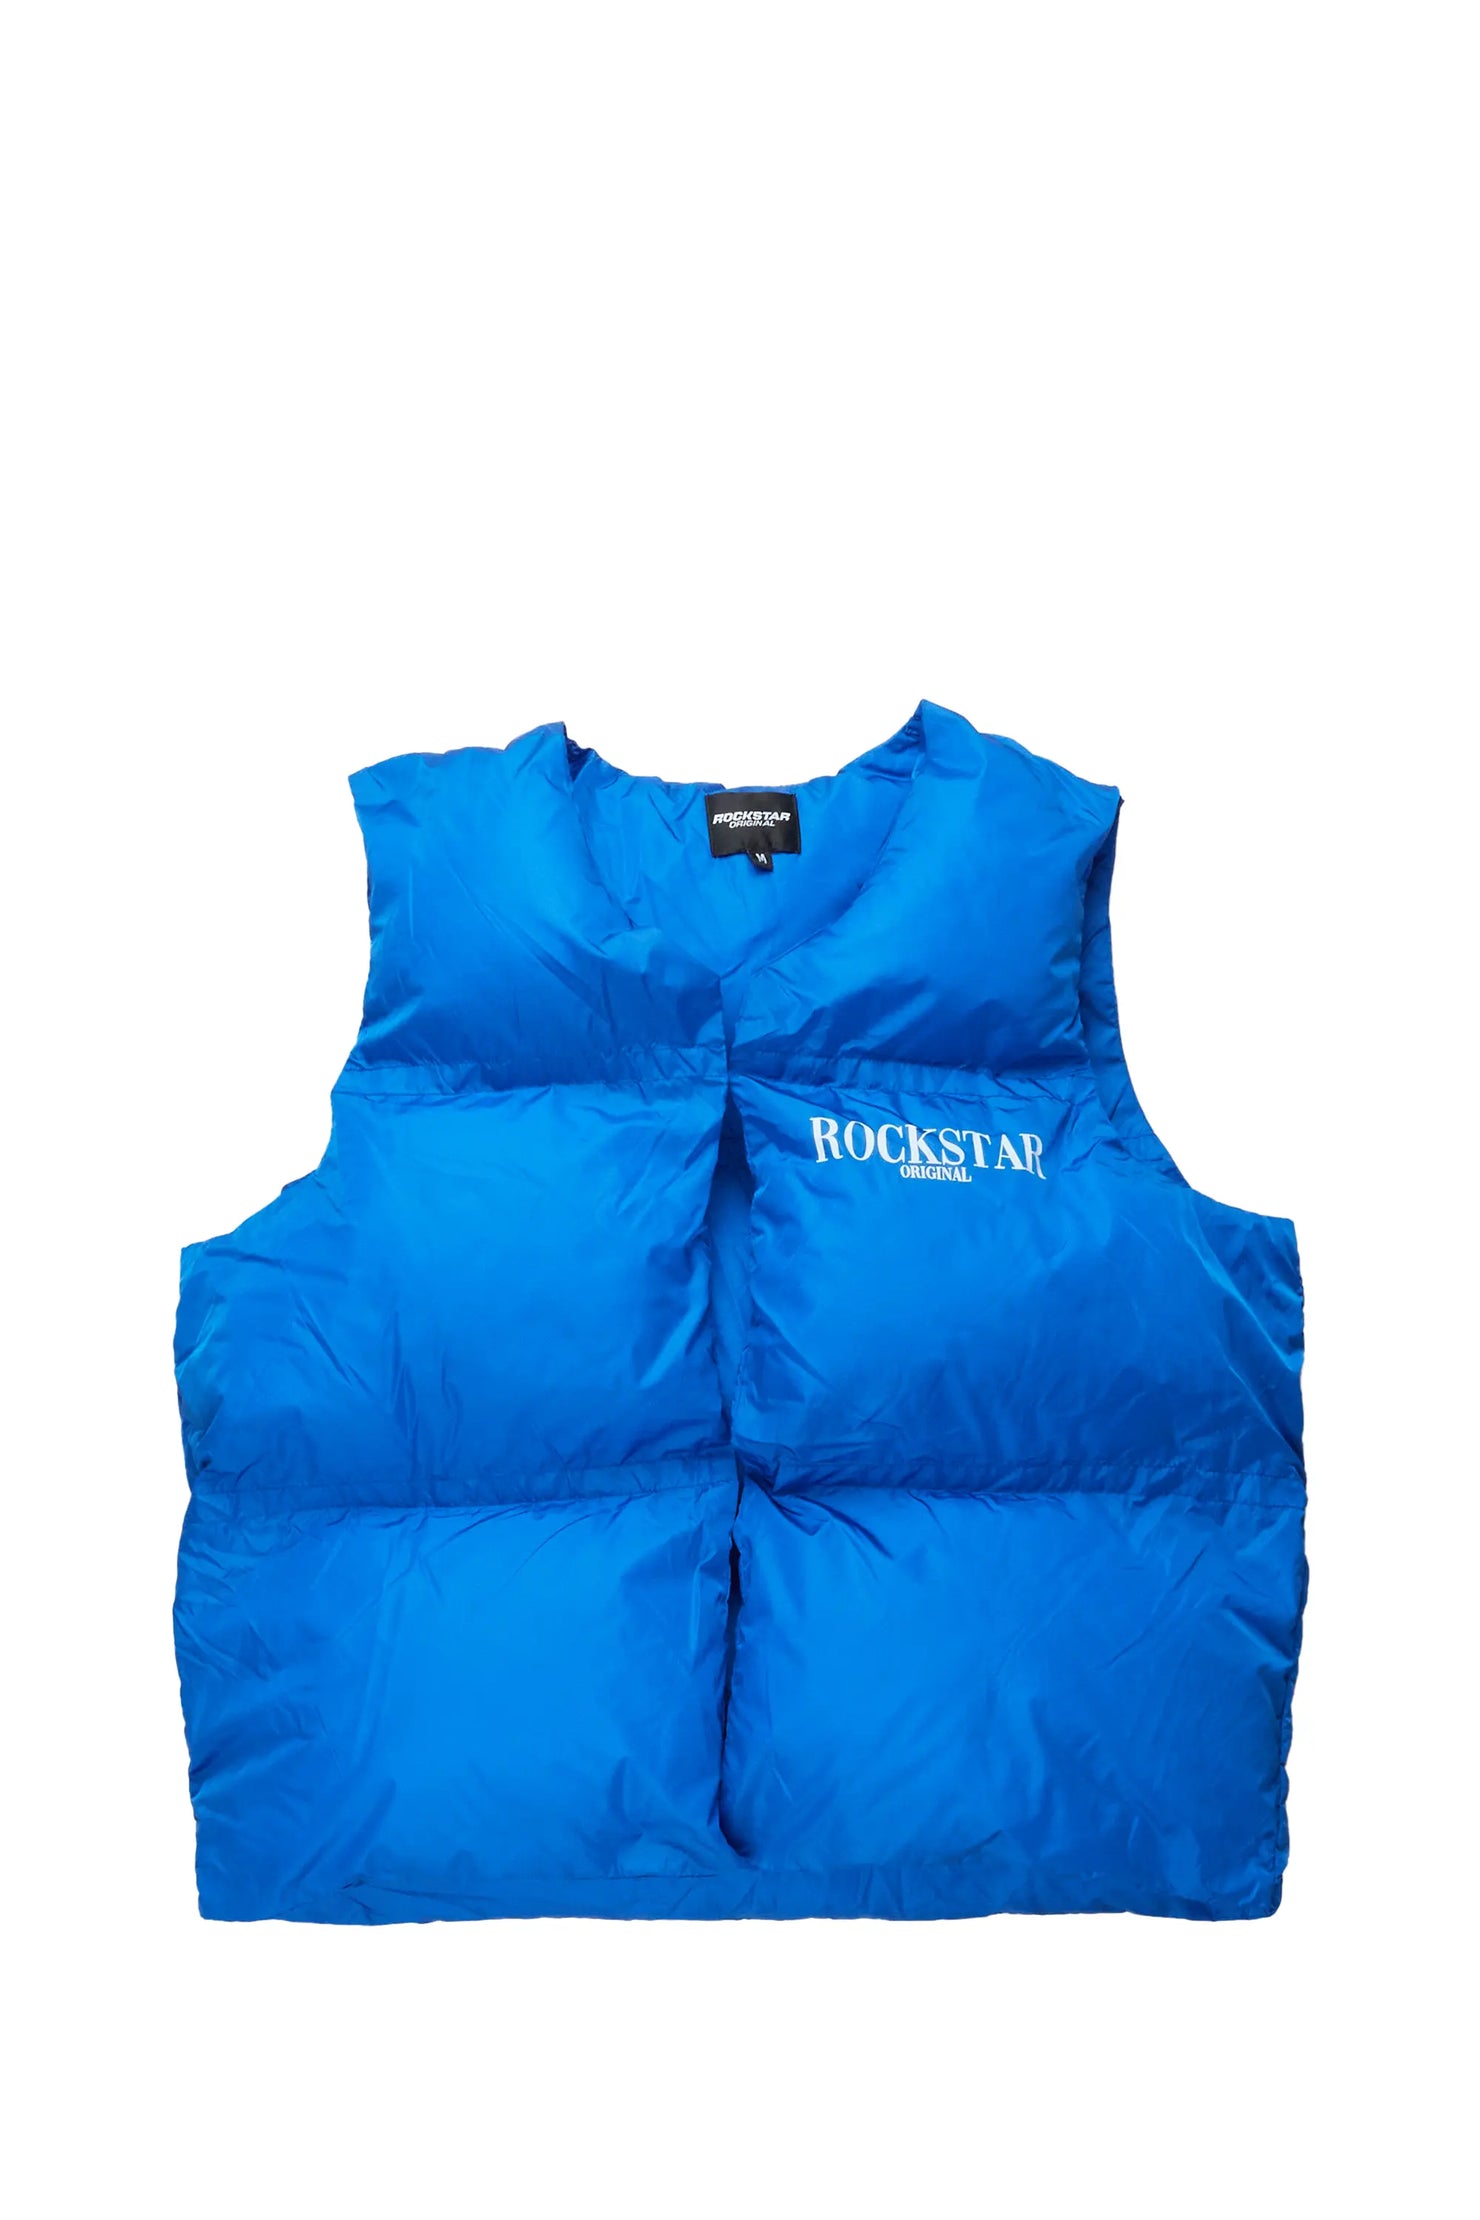 Frederick Royal Blue Puffer Vest– Rockstar Original